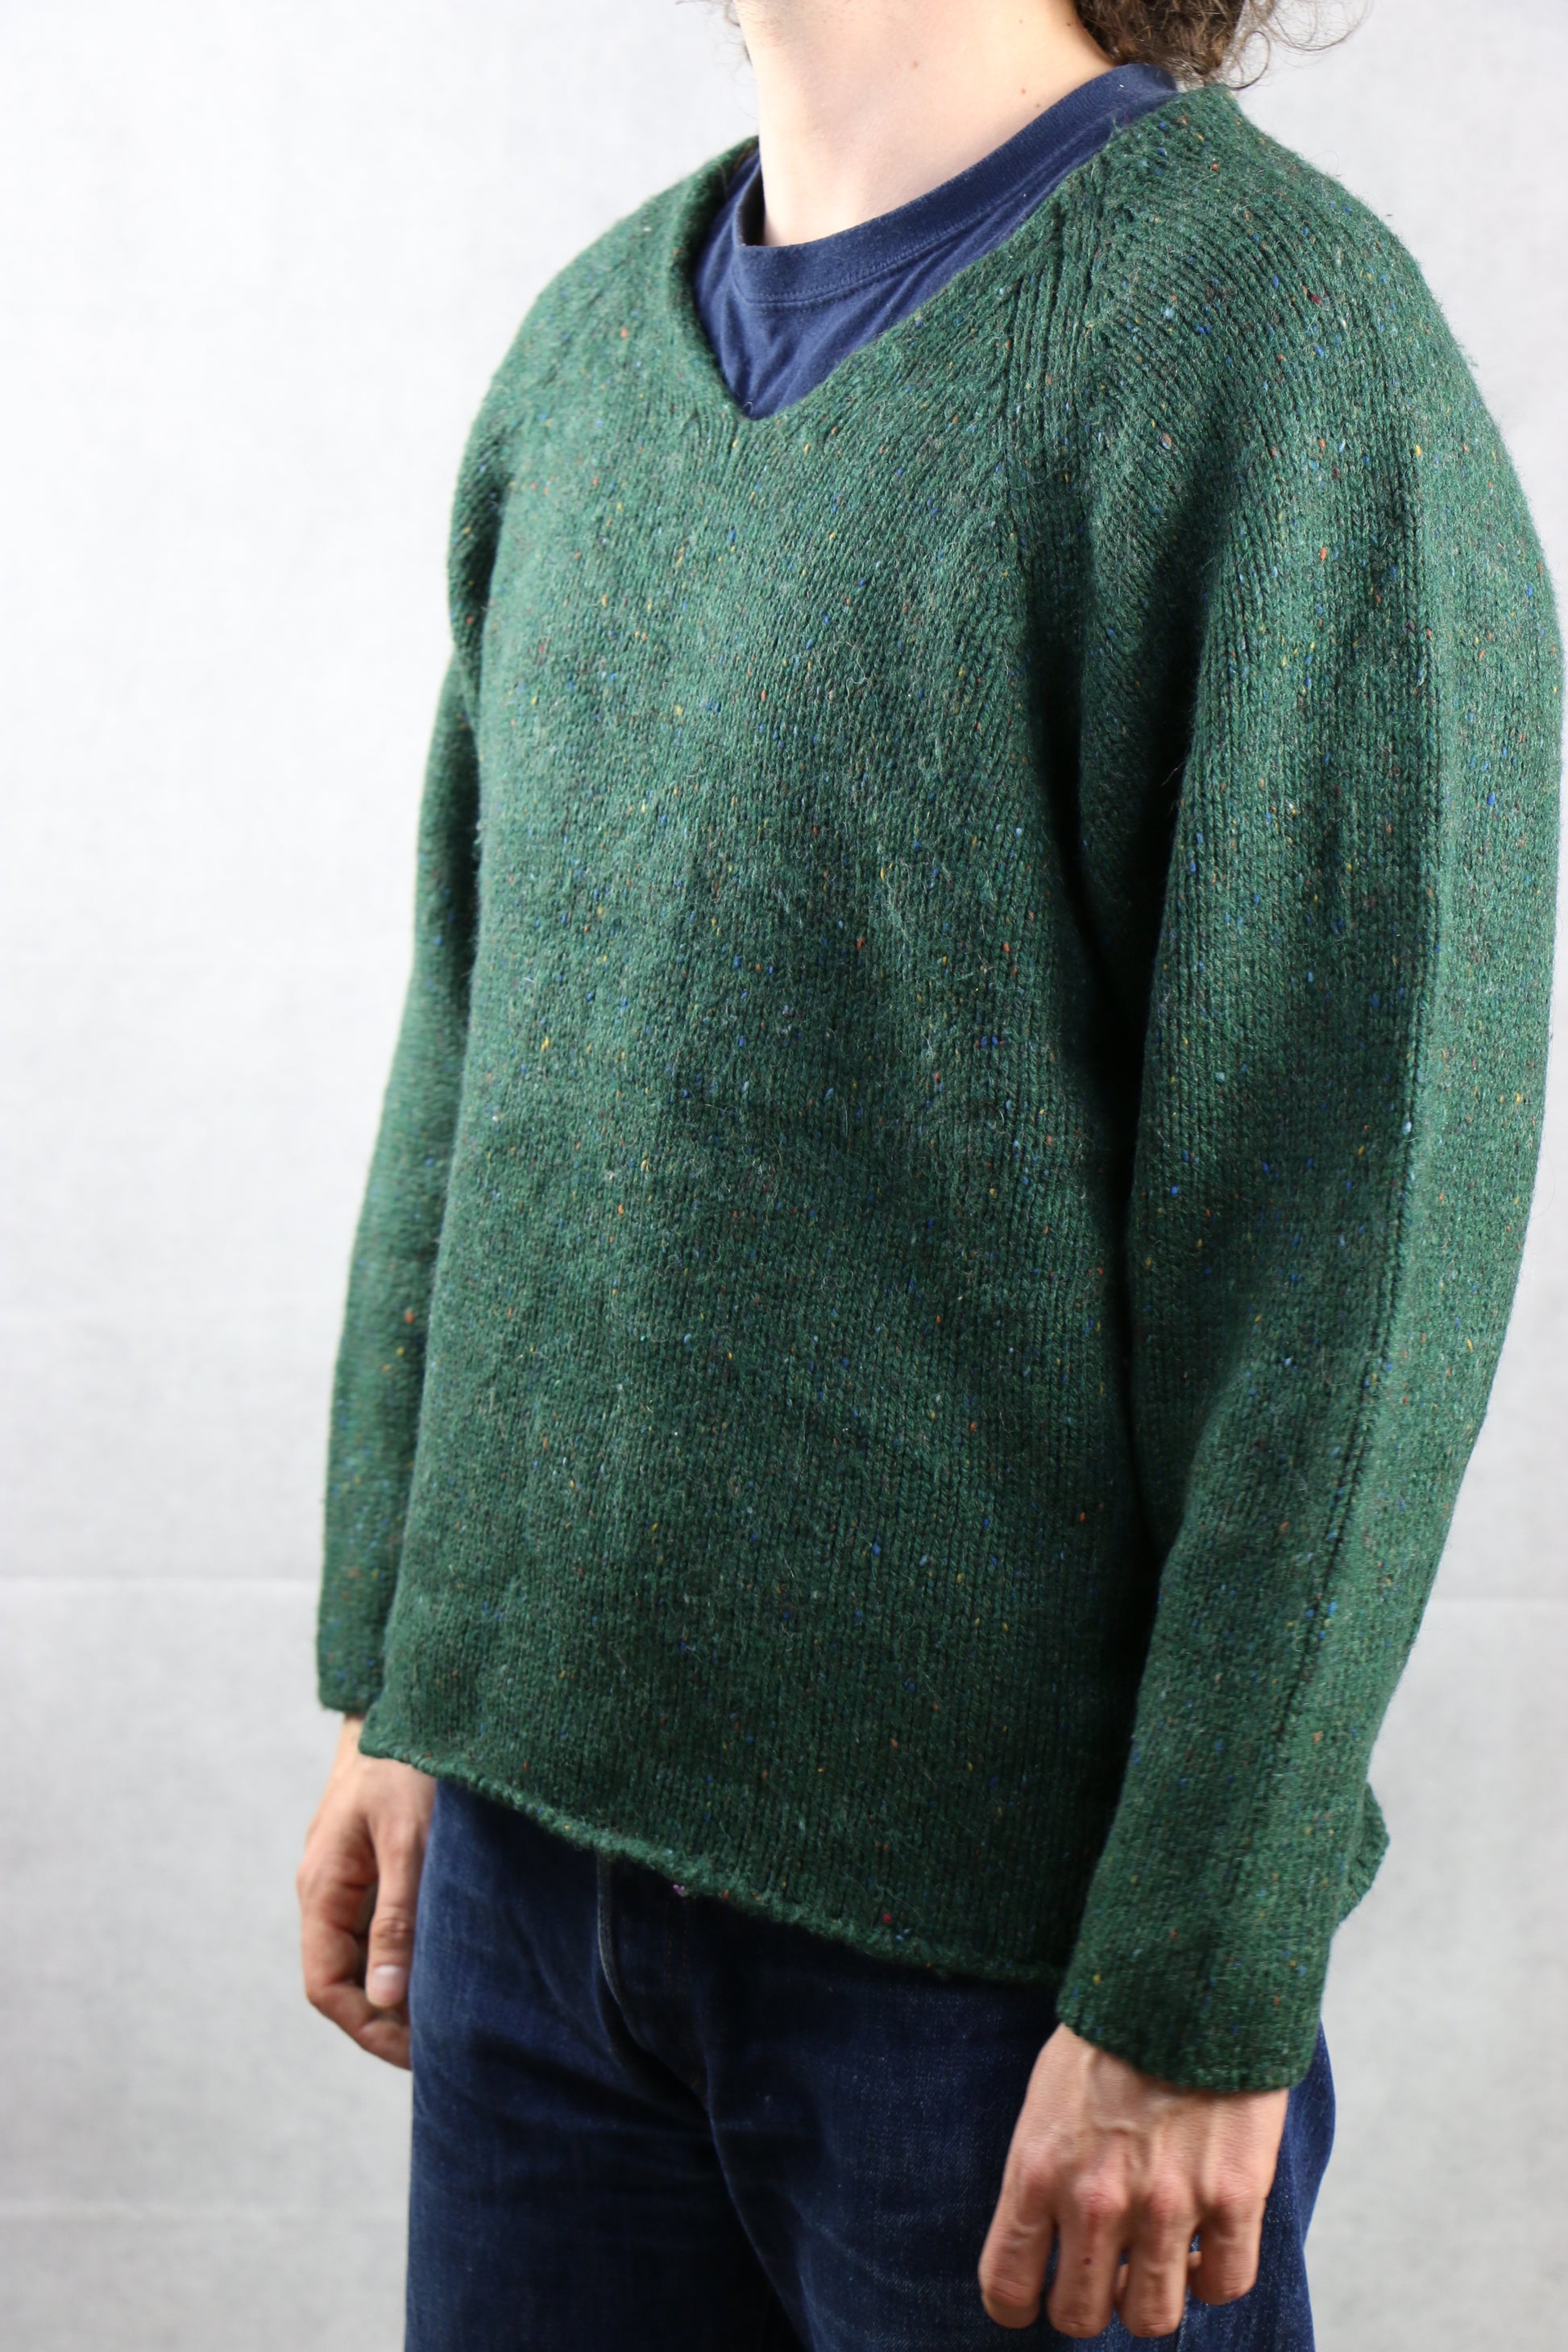 Woolrich Green Sweater - vintage clothing clochard92.com